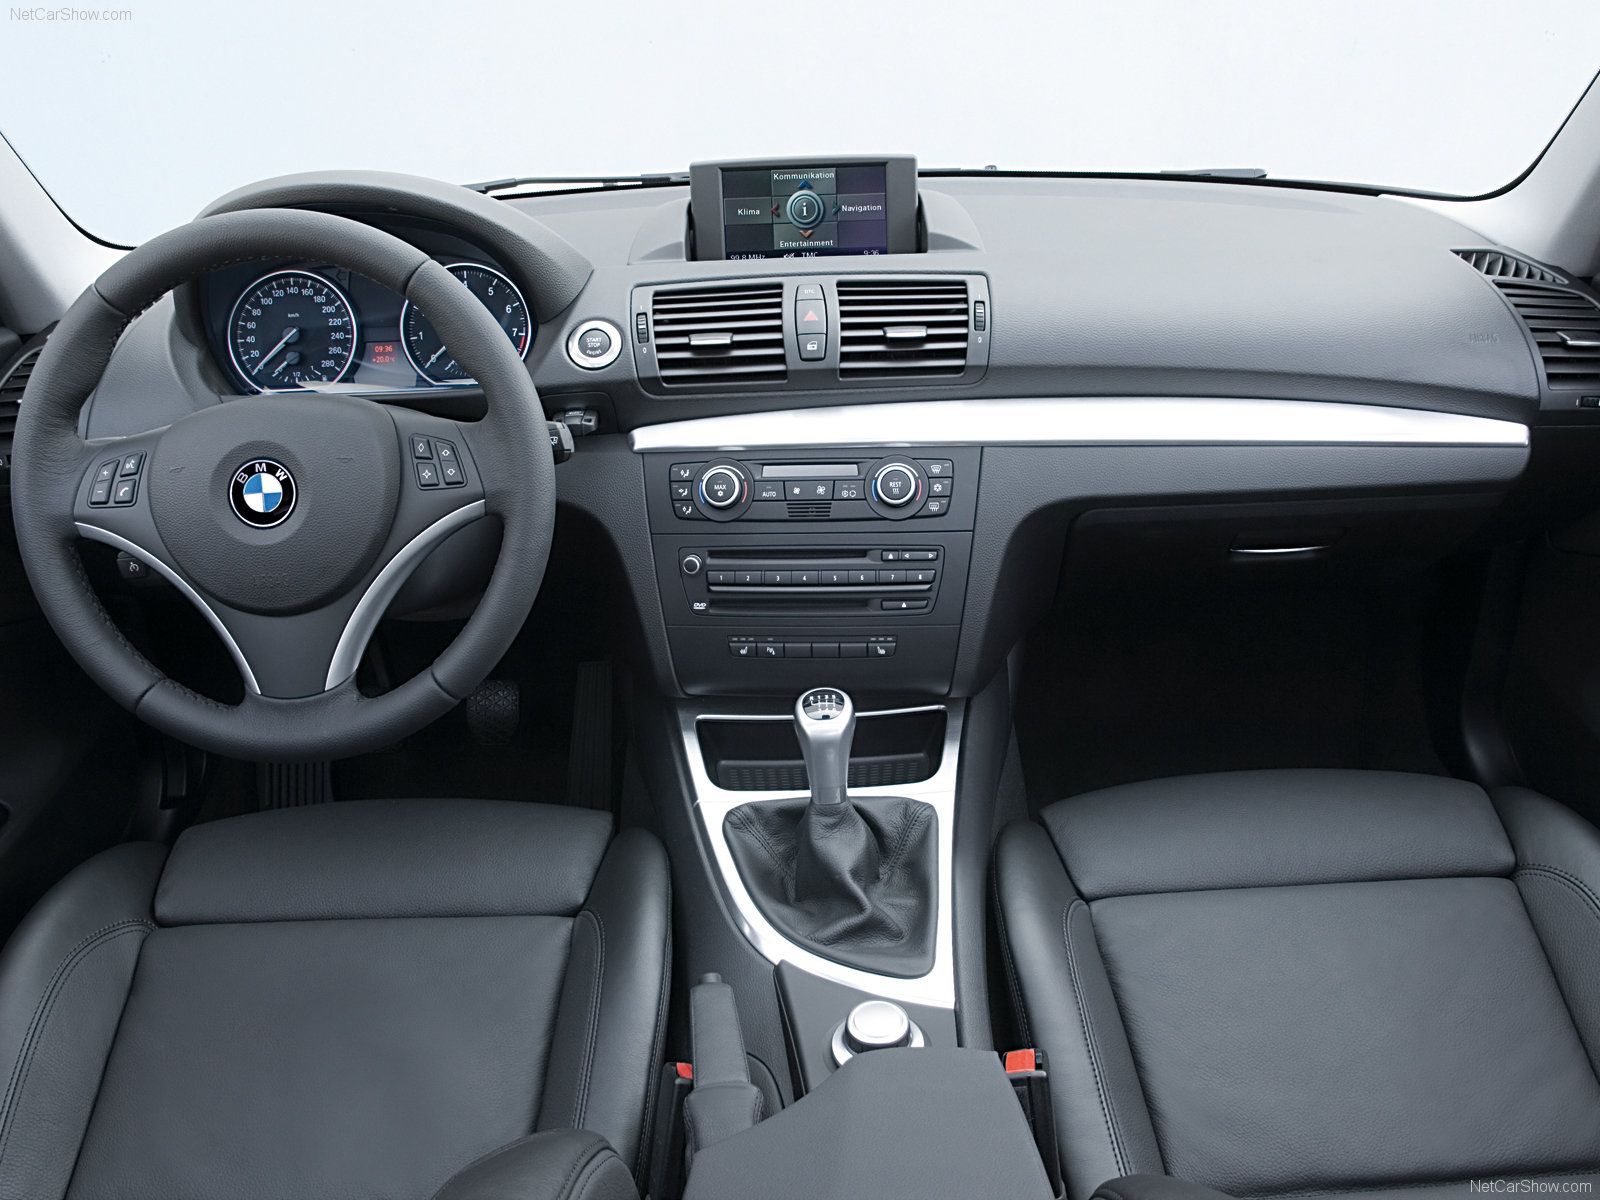 BMW 135i, cabin interior